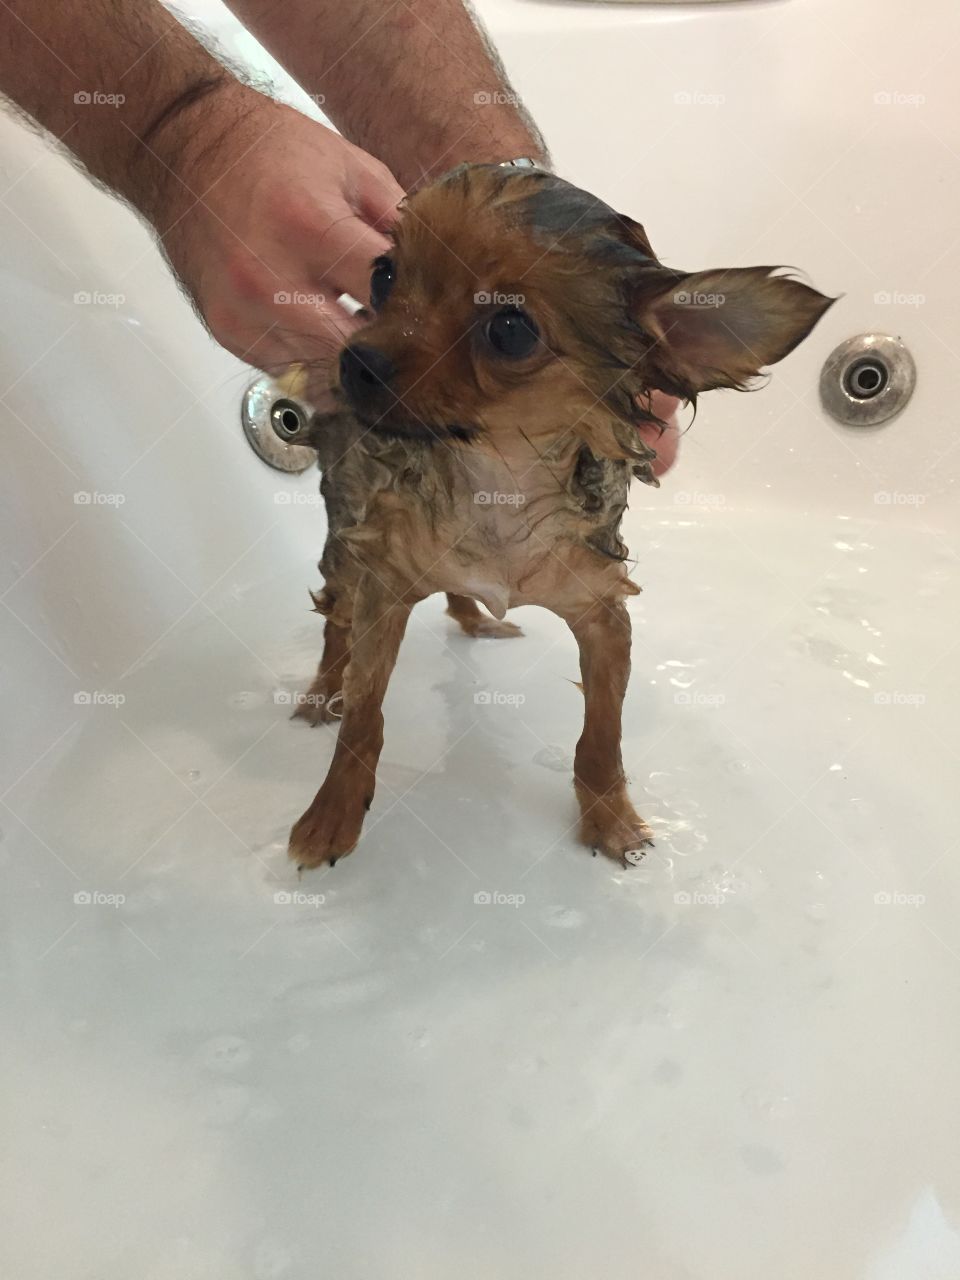 Wet dog that's not happy